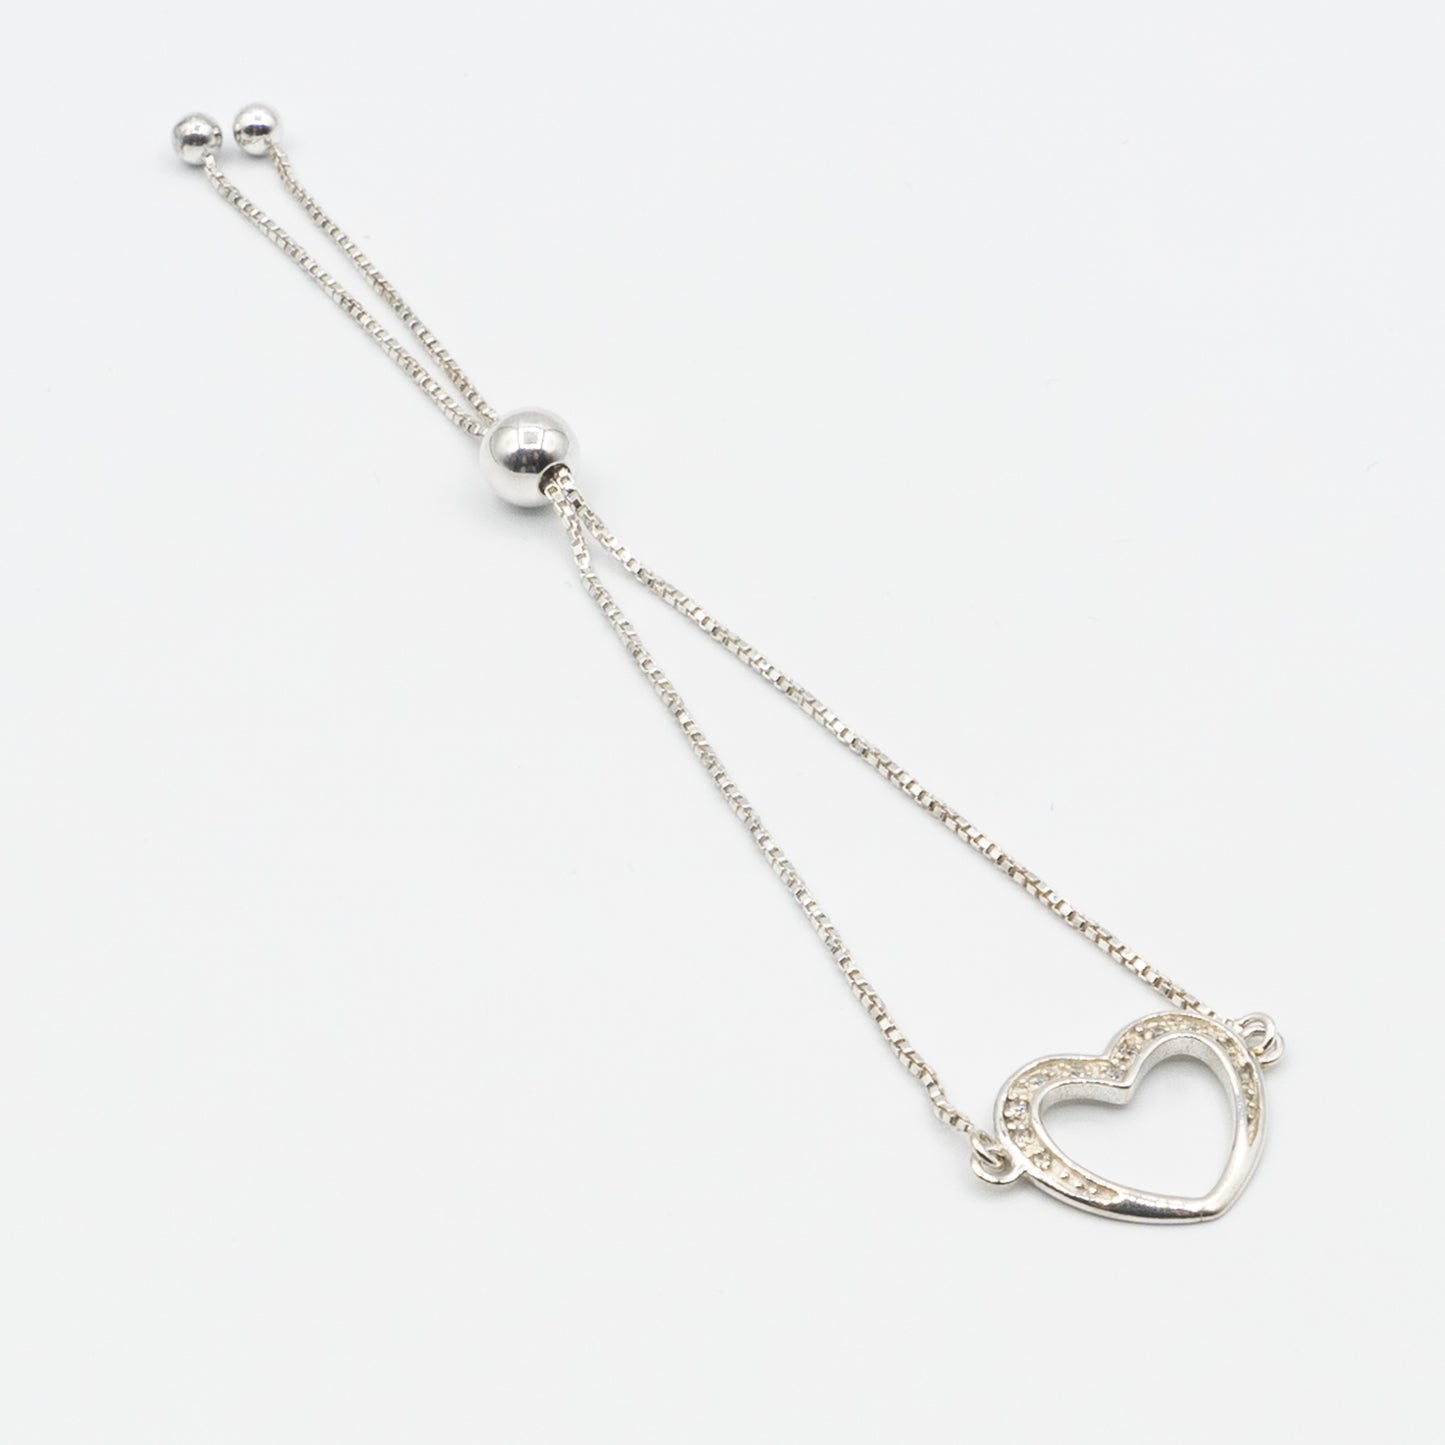 EVELYN - adjustable sterling silver bracelet with open  heart